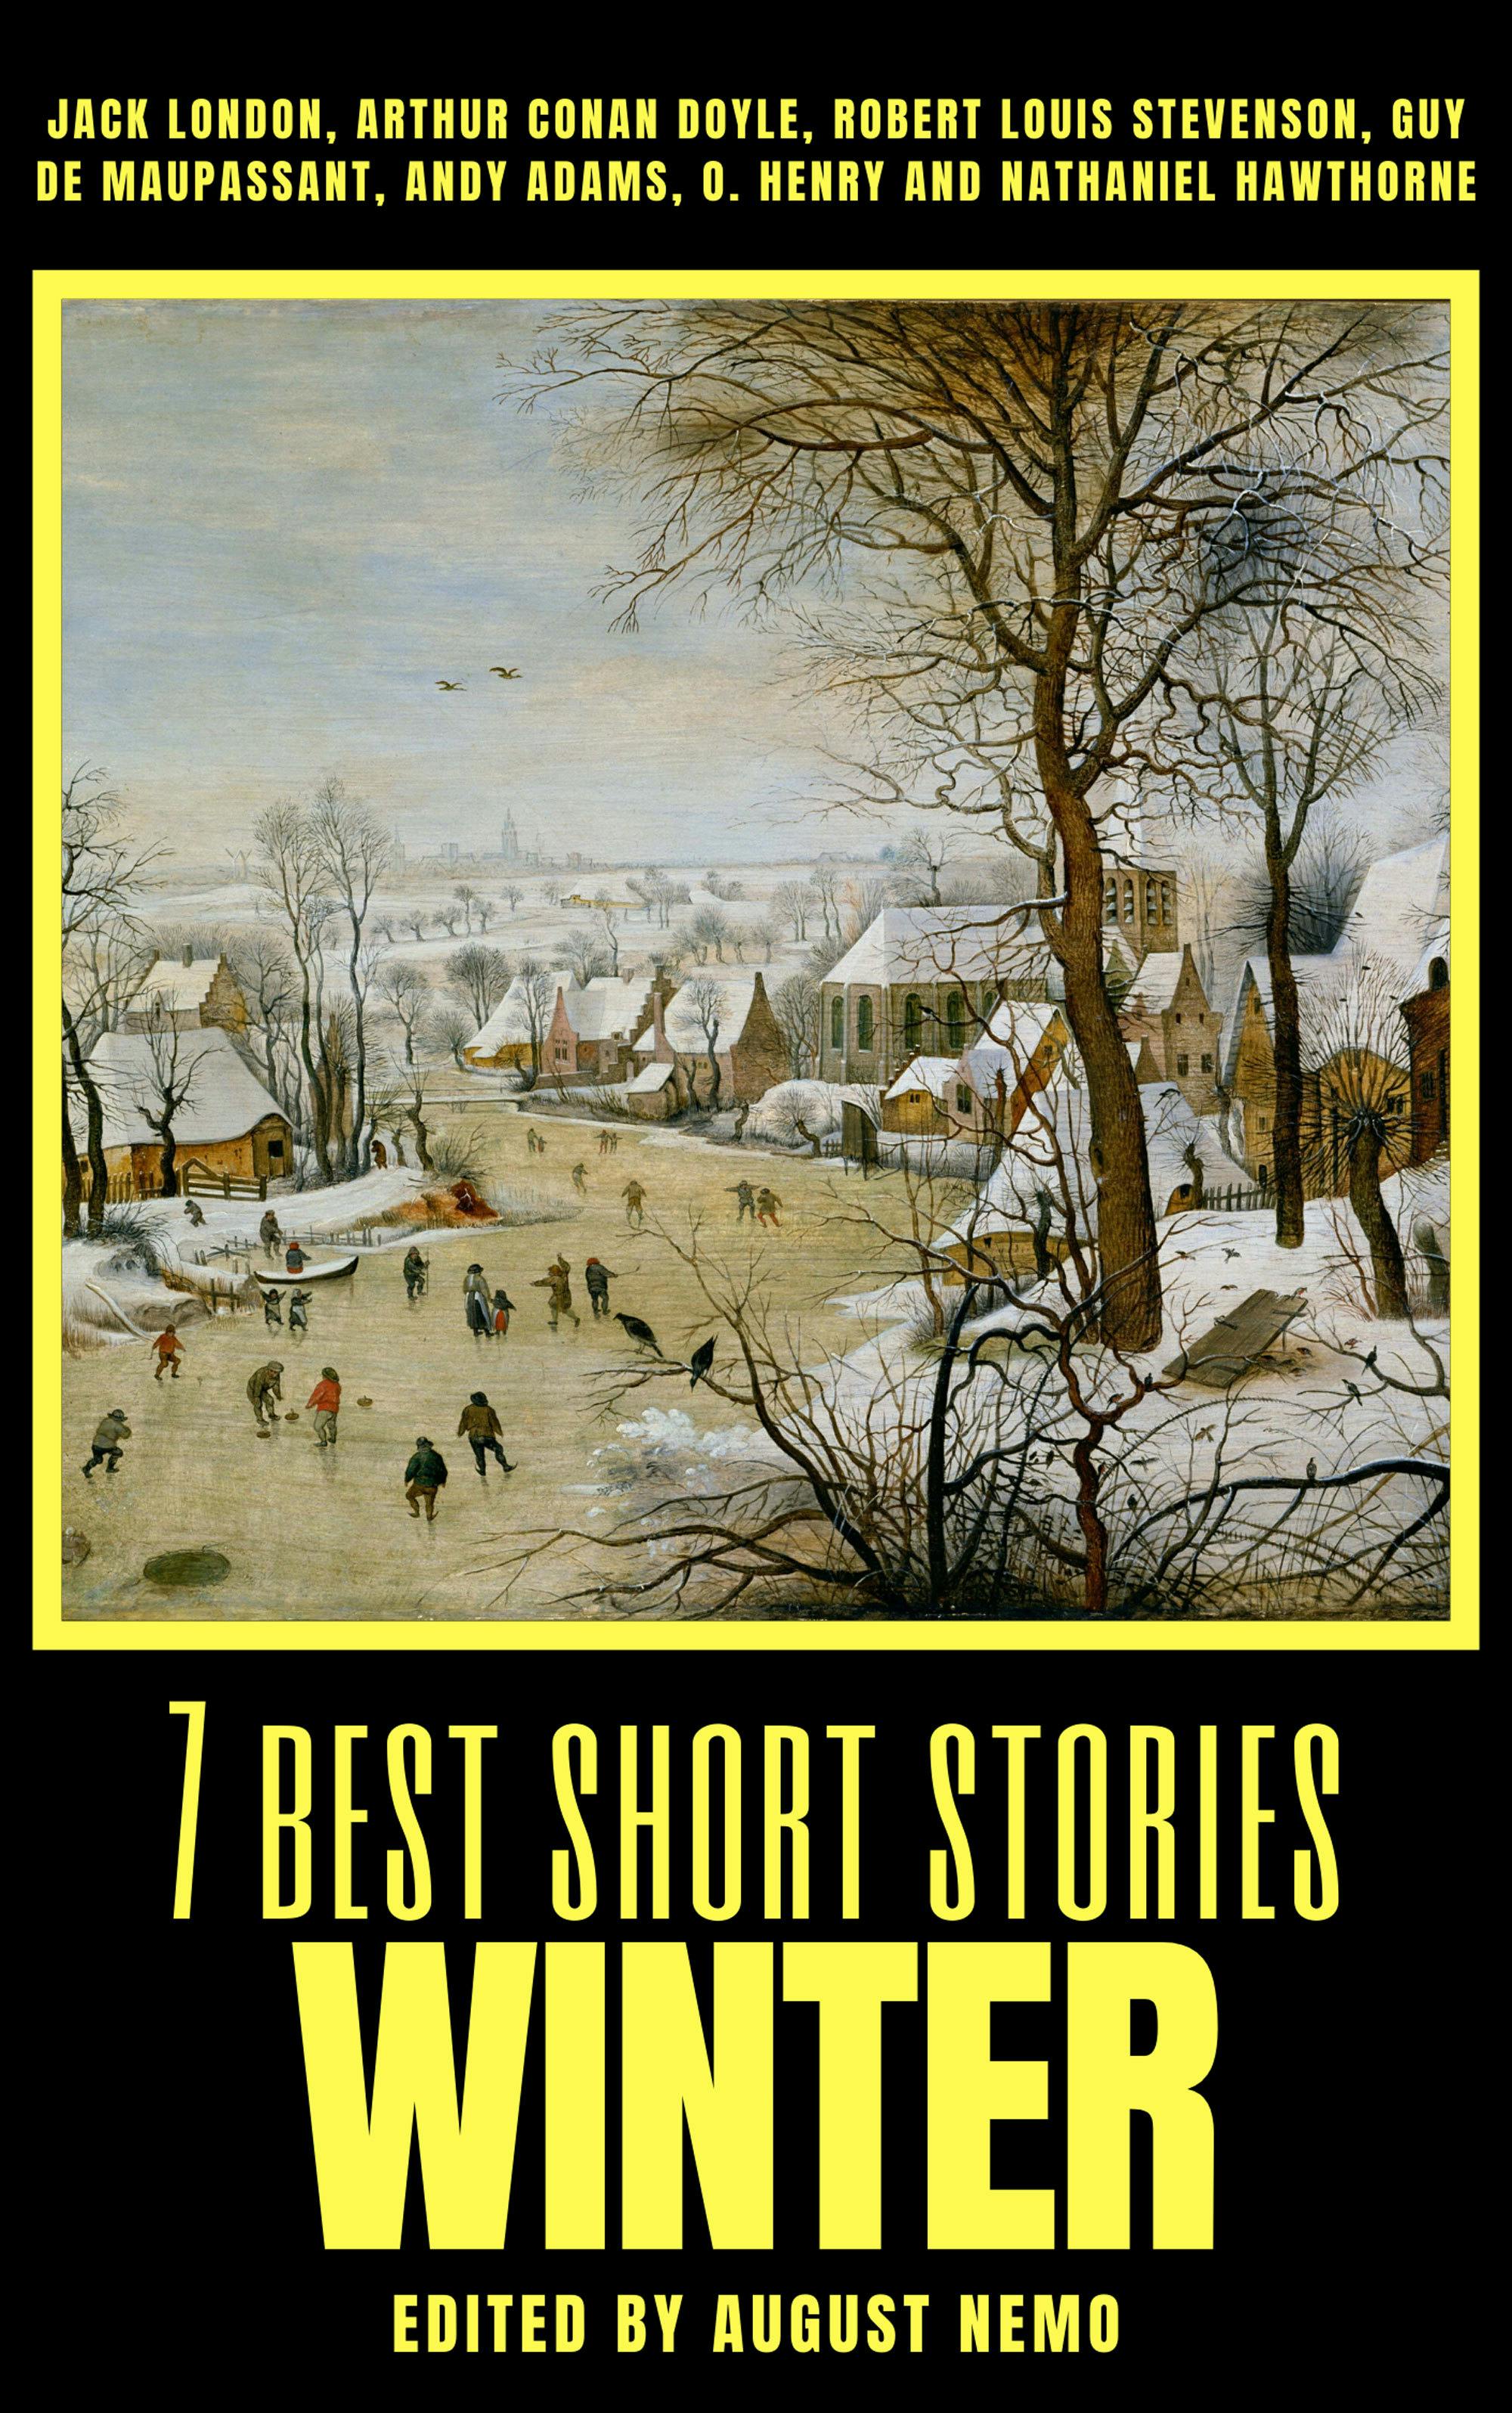 7 best short stories - Winter - Jack London, Andy Adams, Arthur Conan Doyle, Robert Louis Stevenson, Guy de Maupassant, Nathaniel Hawthorne, O. Henry, August Nemo